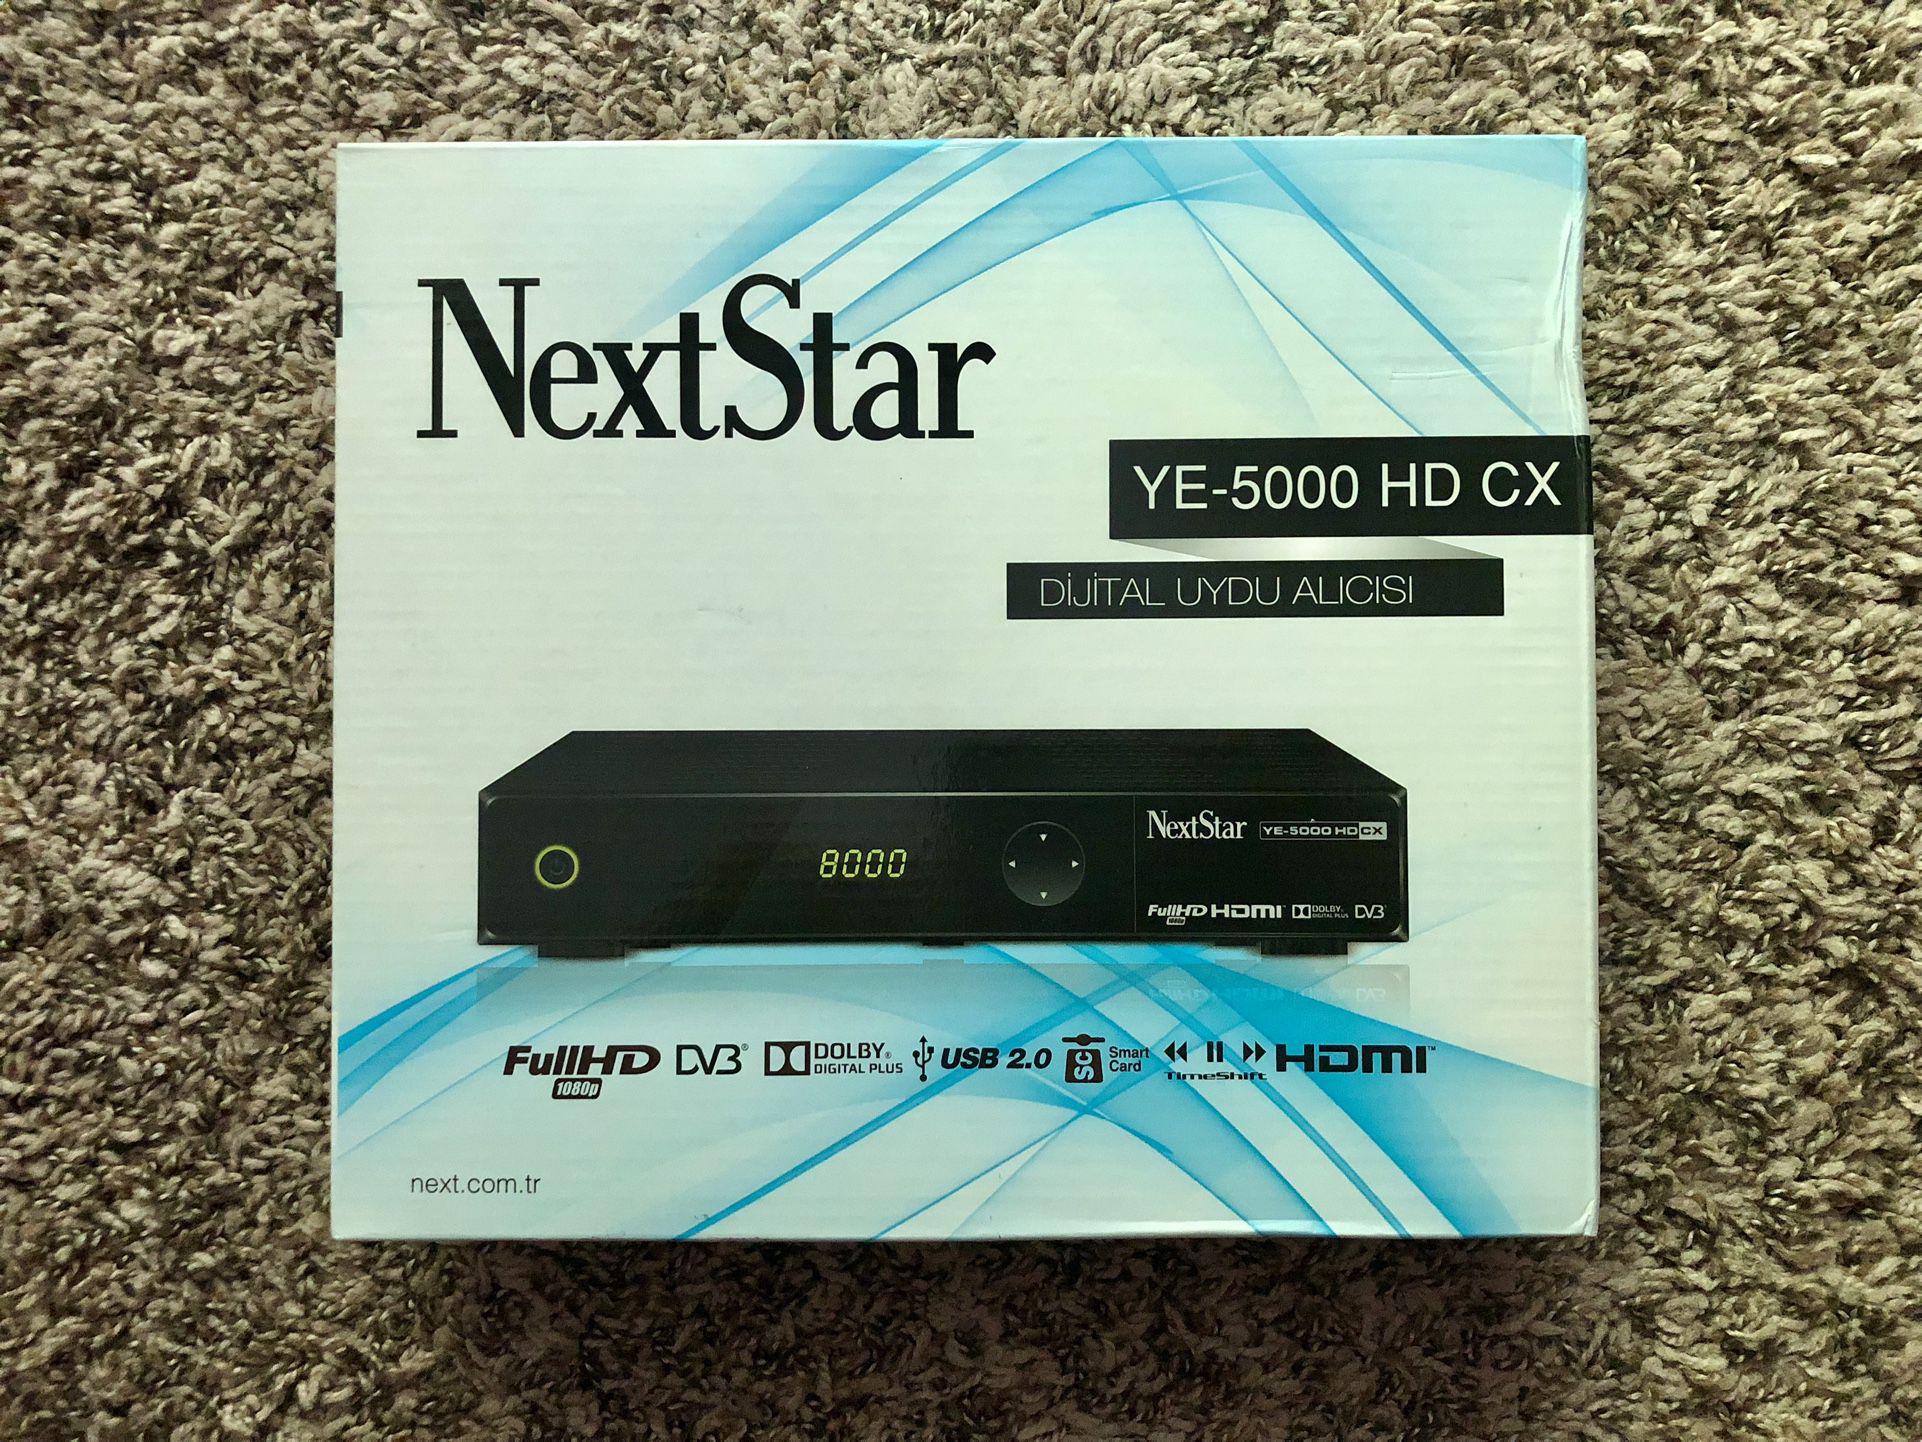 NextStar TV Streaming Device